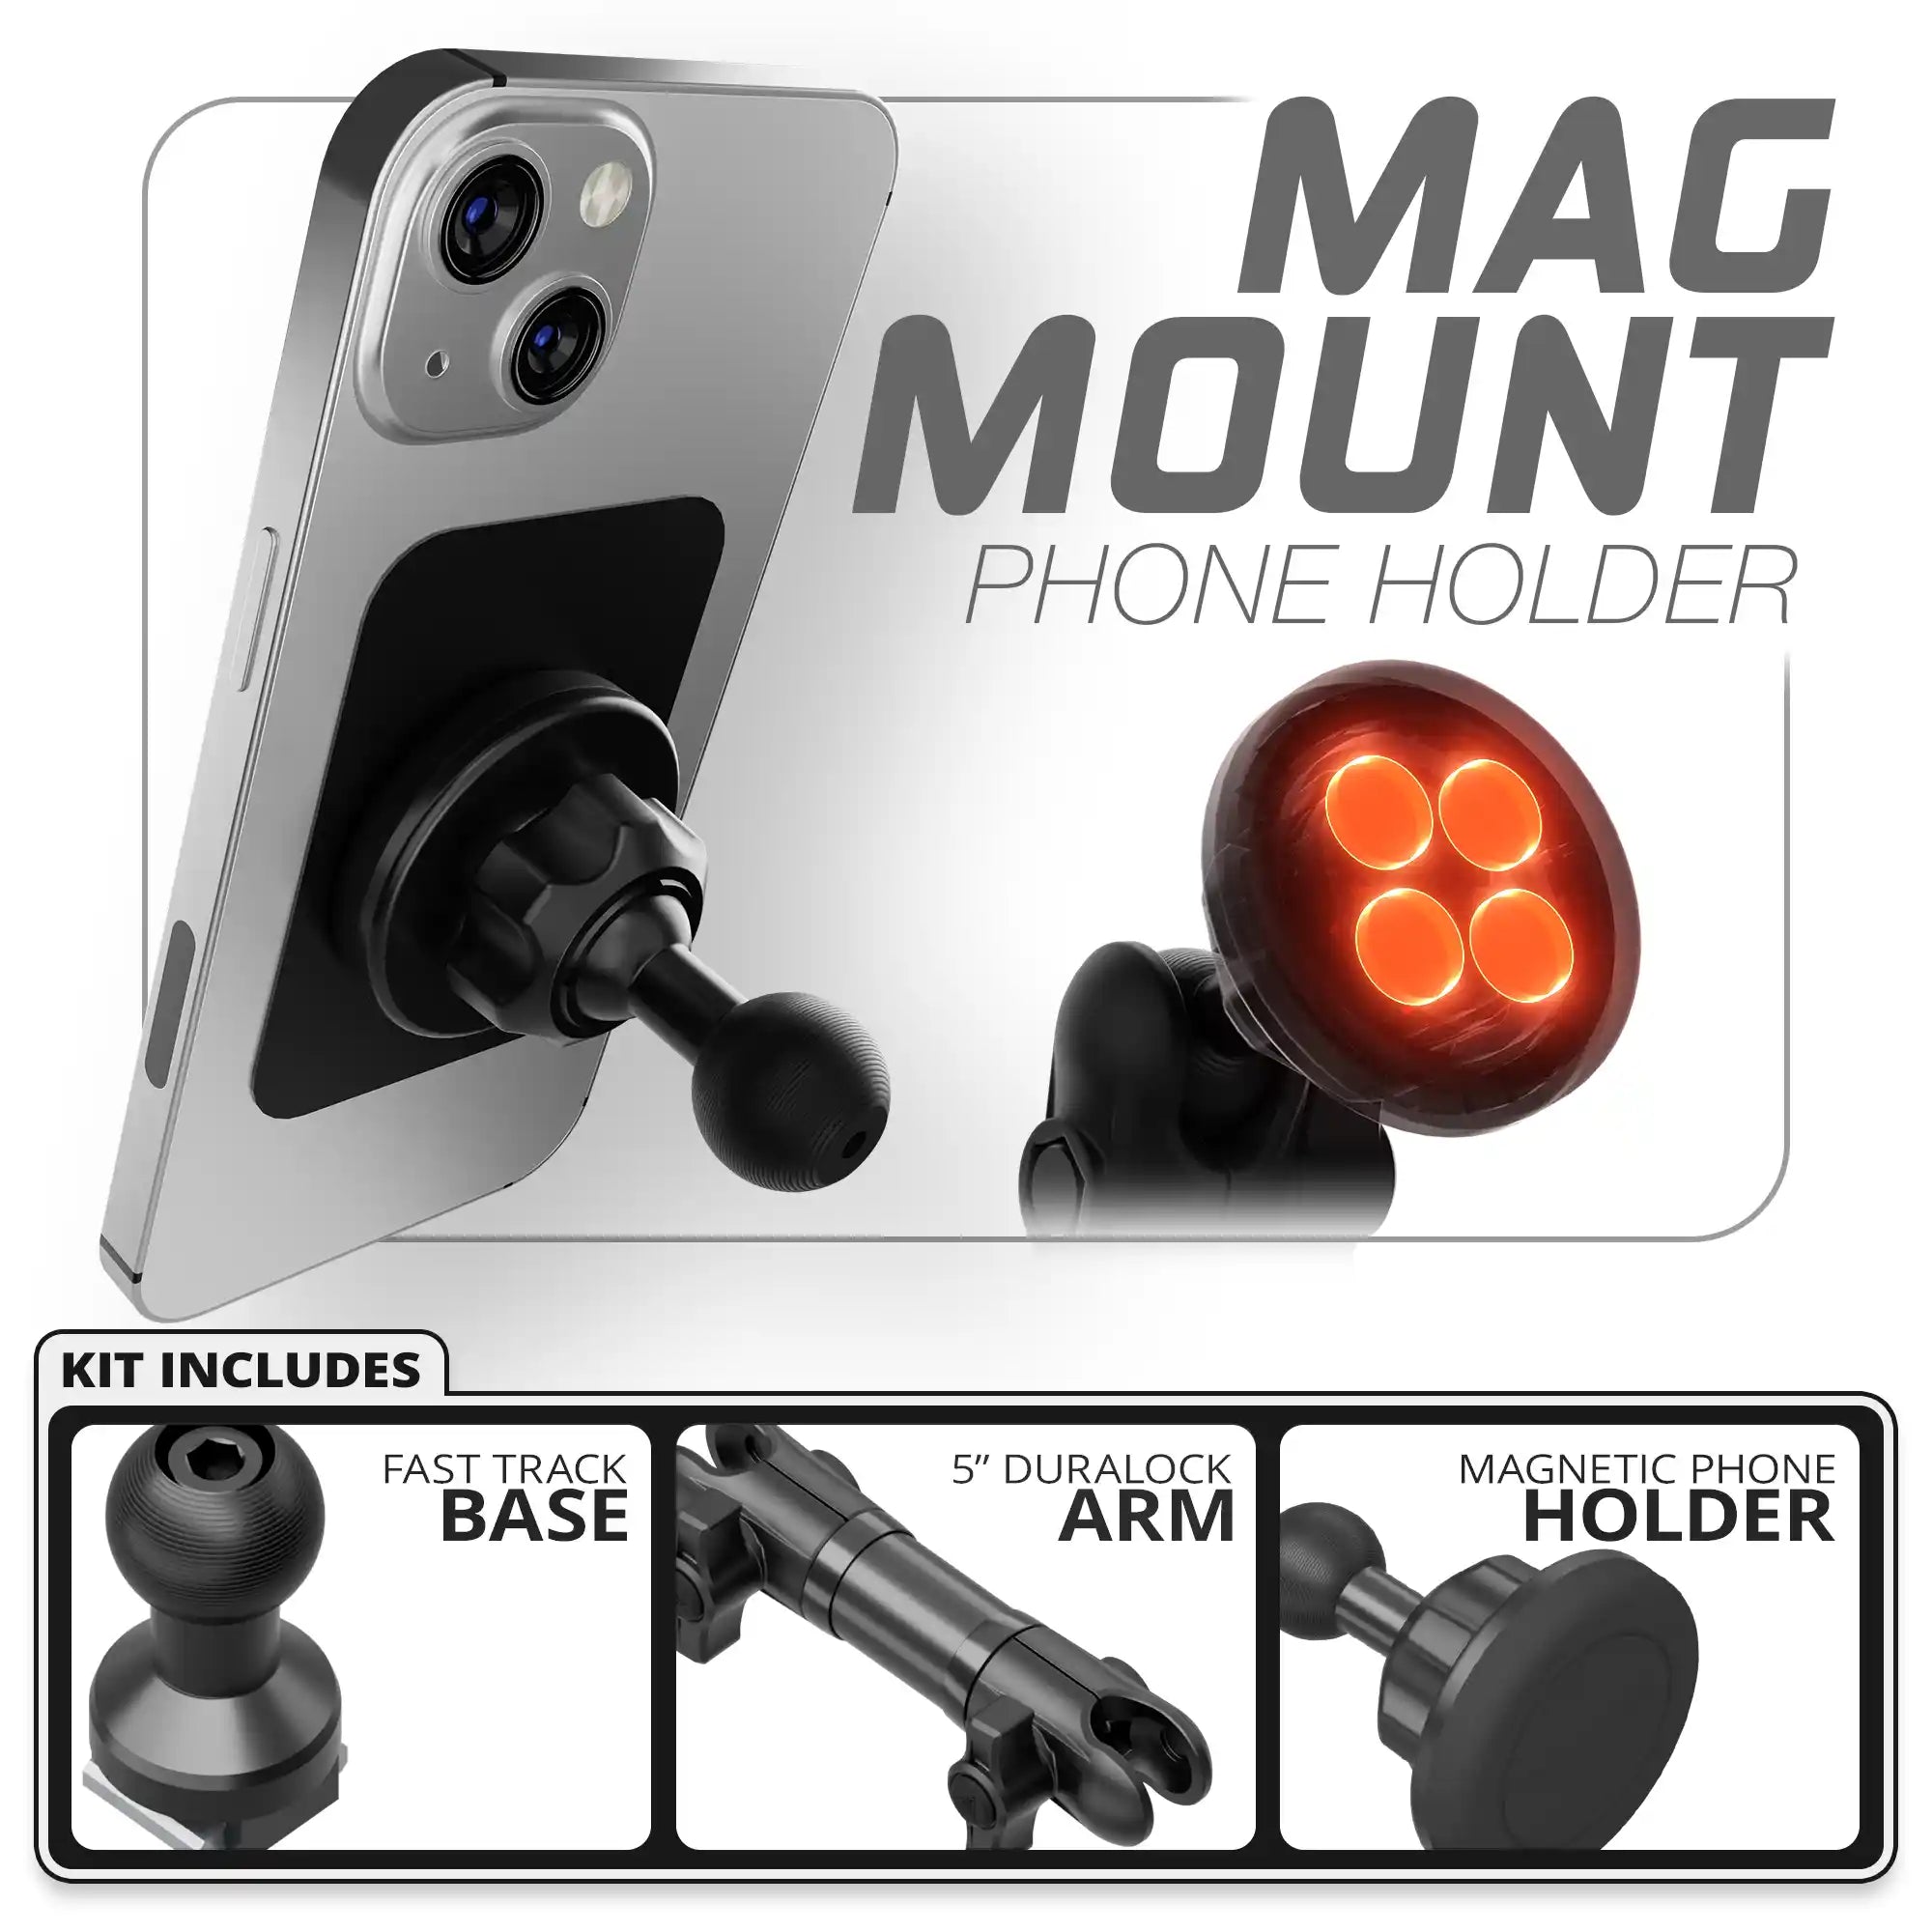 Magnetic Phone Holder | Fast Track Base | 5" DuraLock Arm